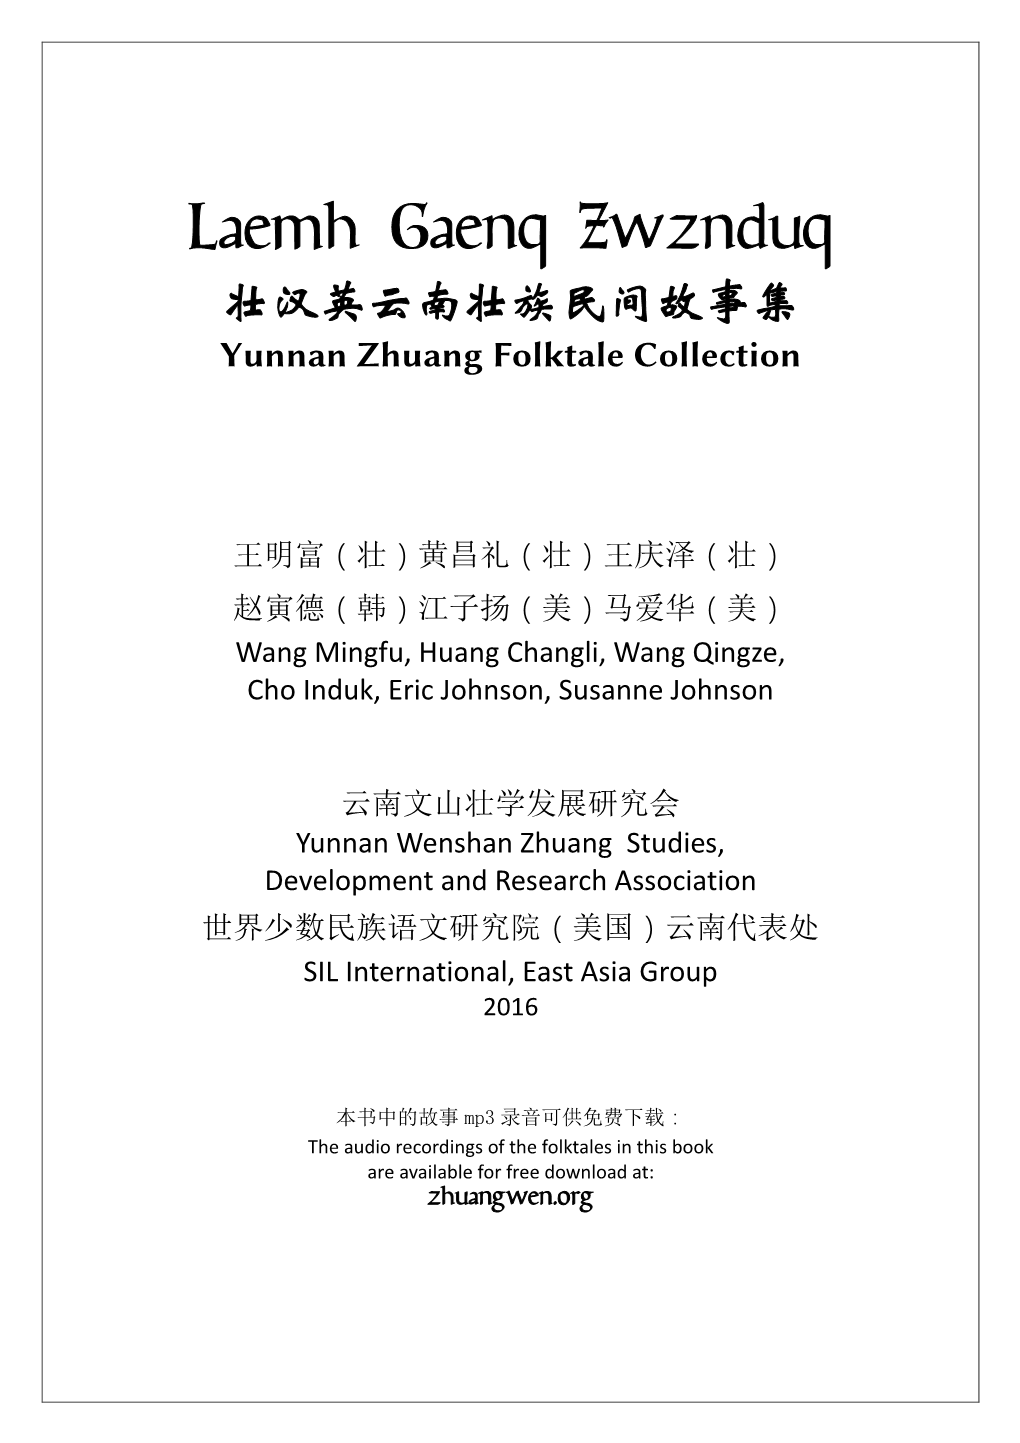 Laemh Gaenq Zwznduq 壮汉英云南壮族民间故事集 Yunnan Zhuang Folktale Collection